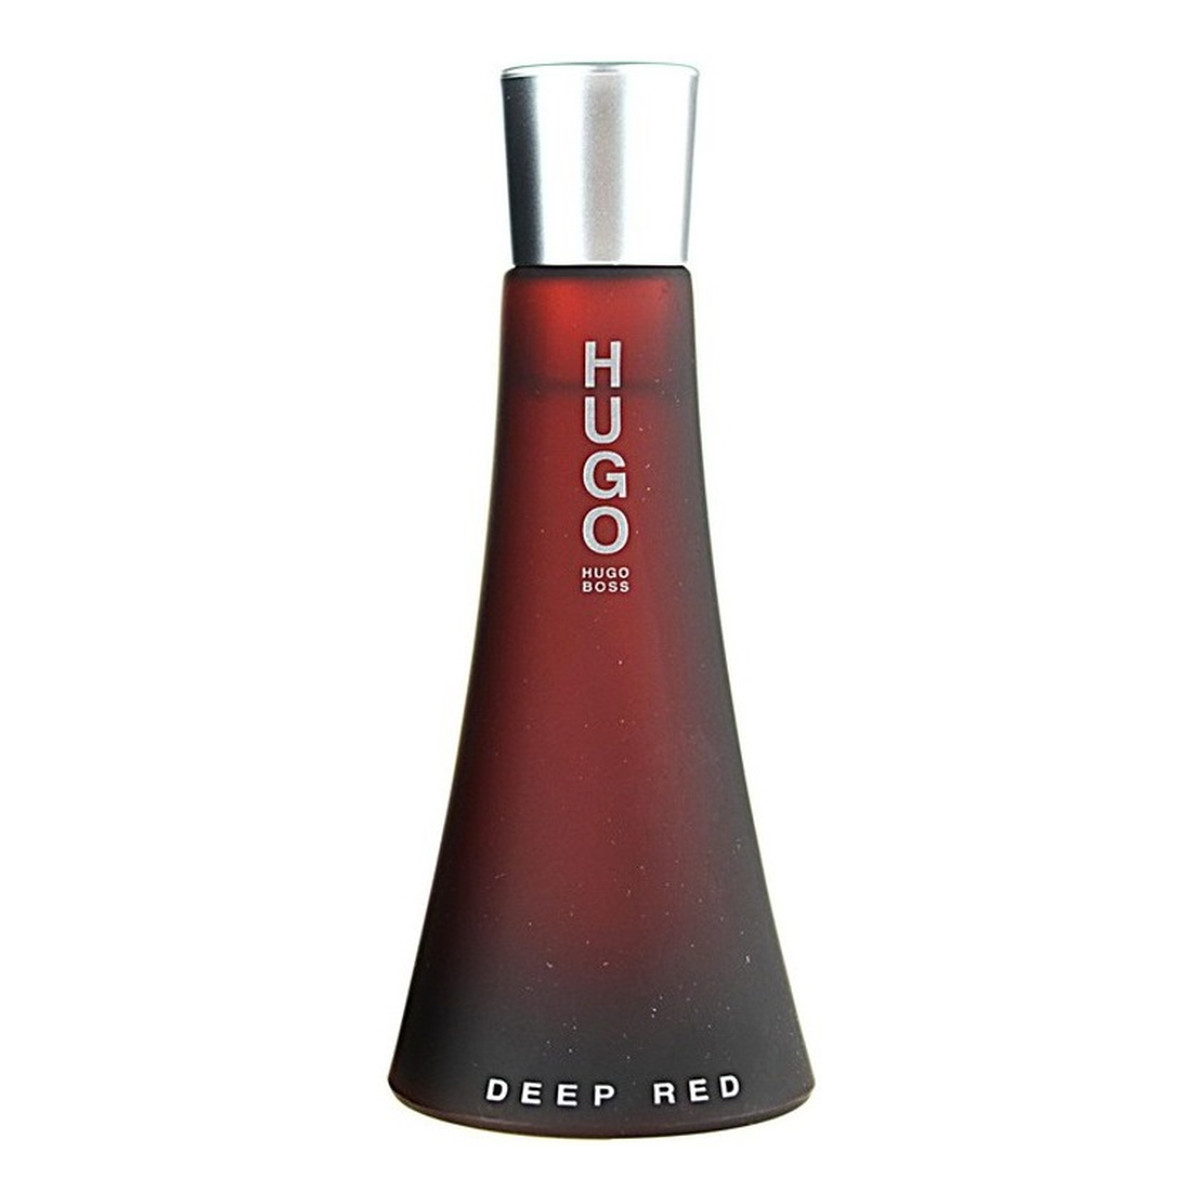 Hugo Boss Deep Red Woda perfumowana spray 90ml